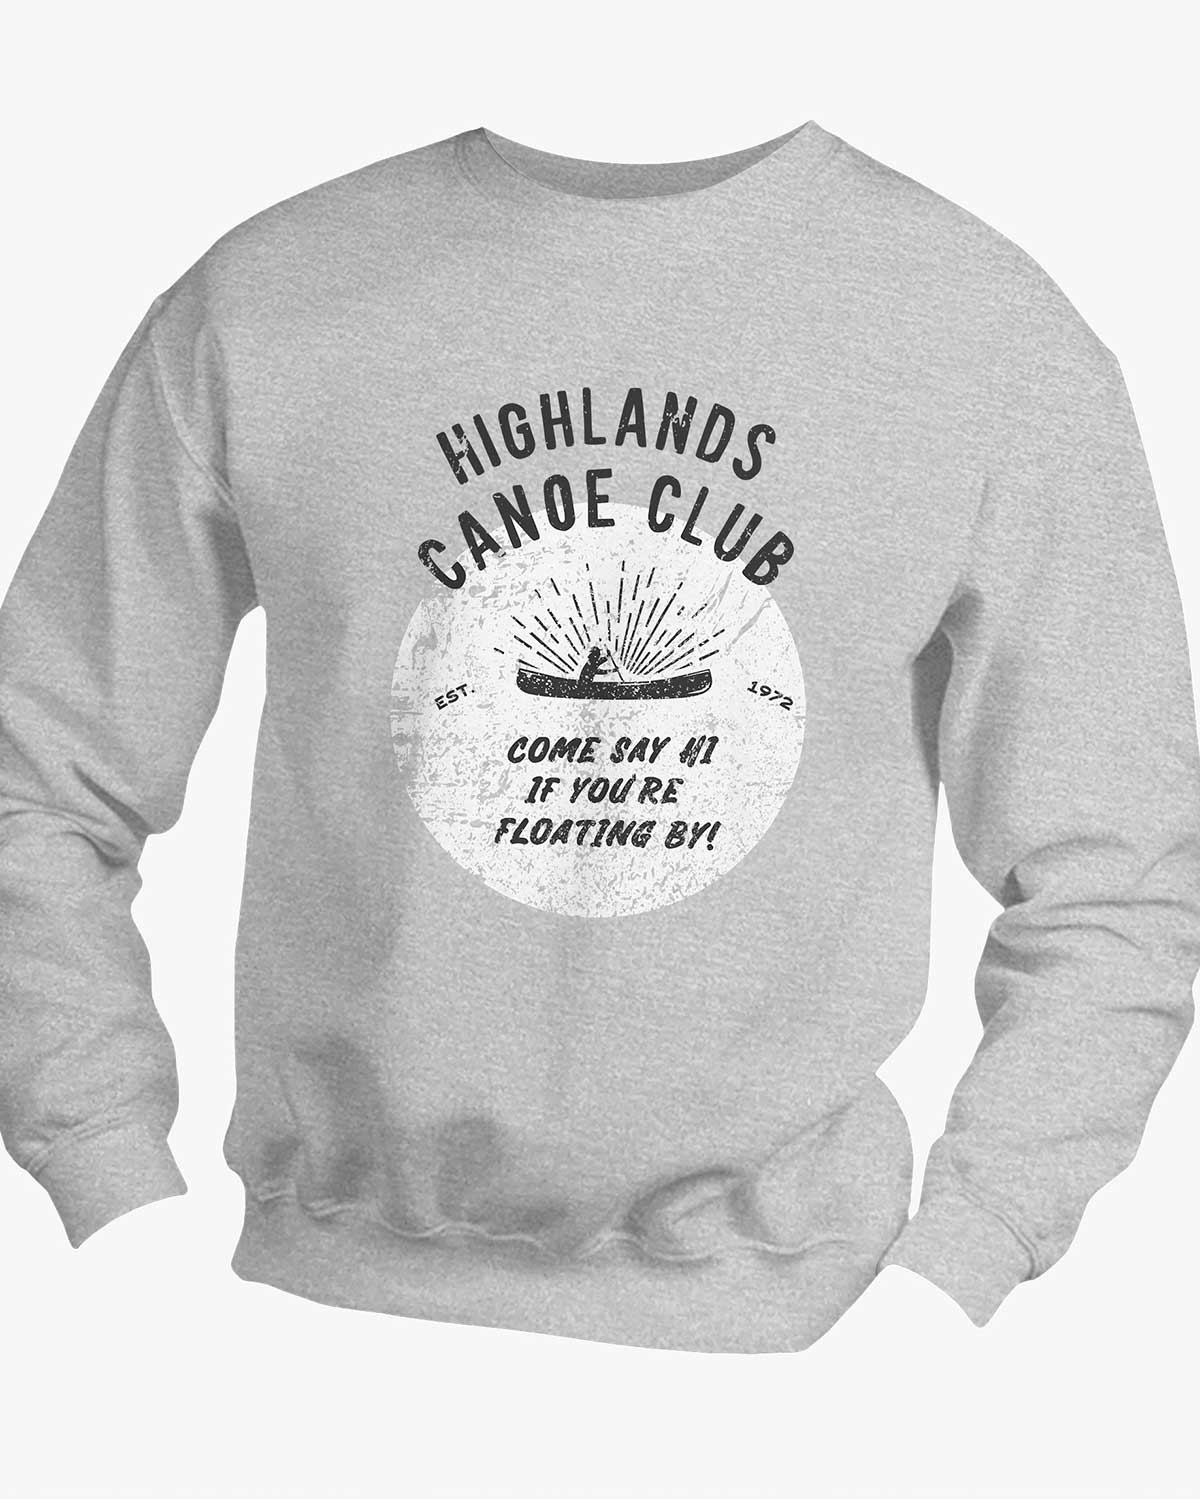 Canoe Club - Highlands - Sweater